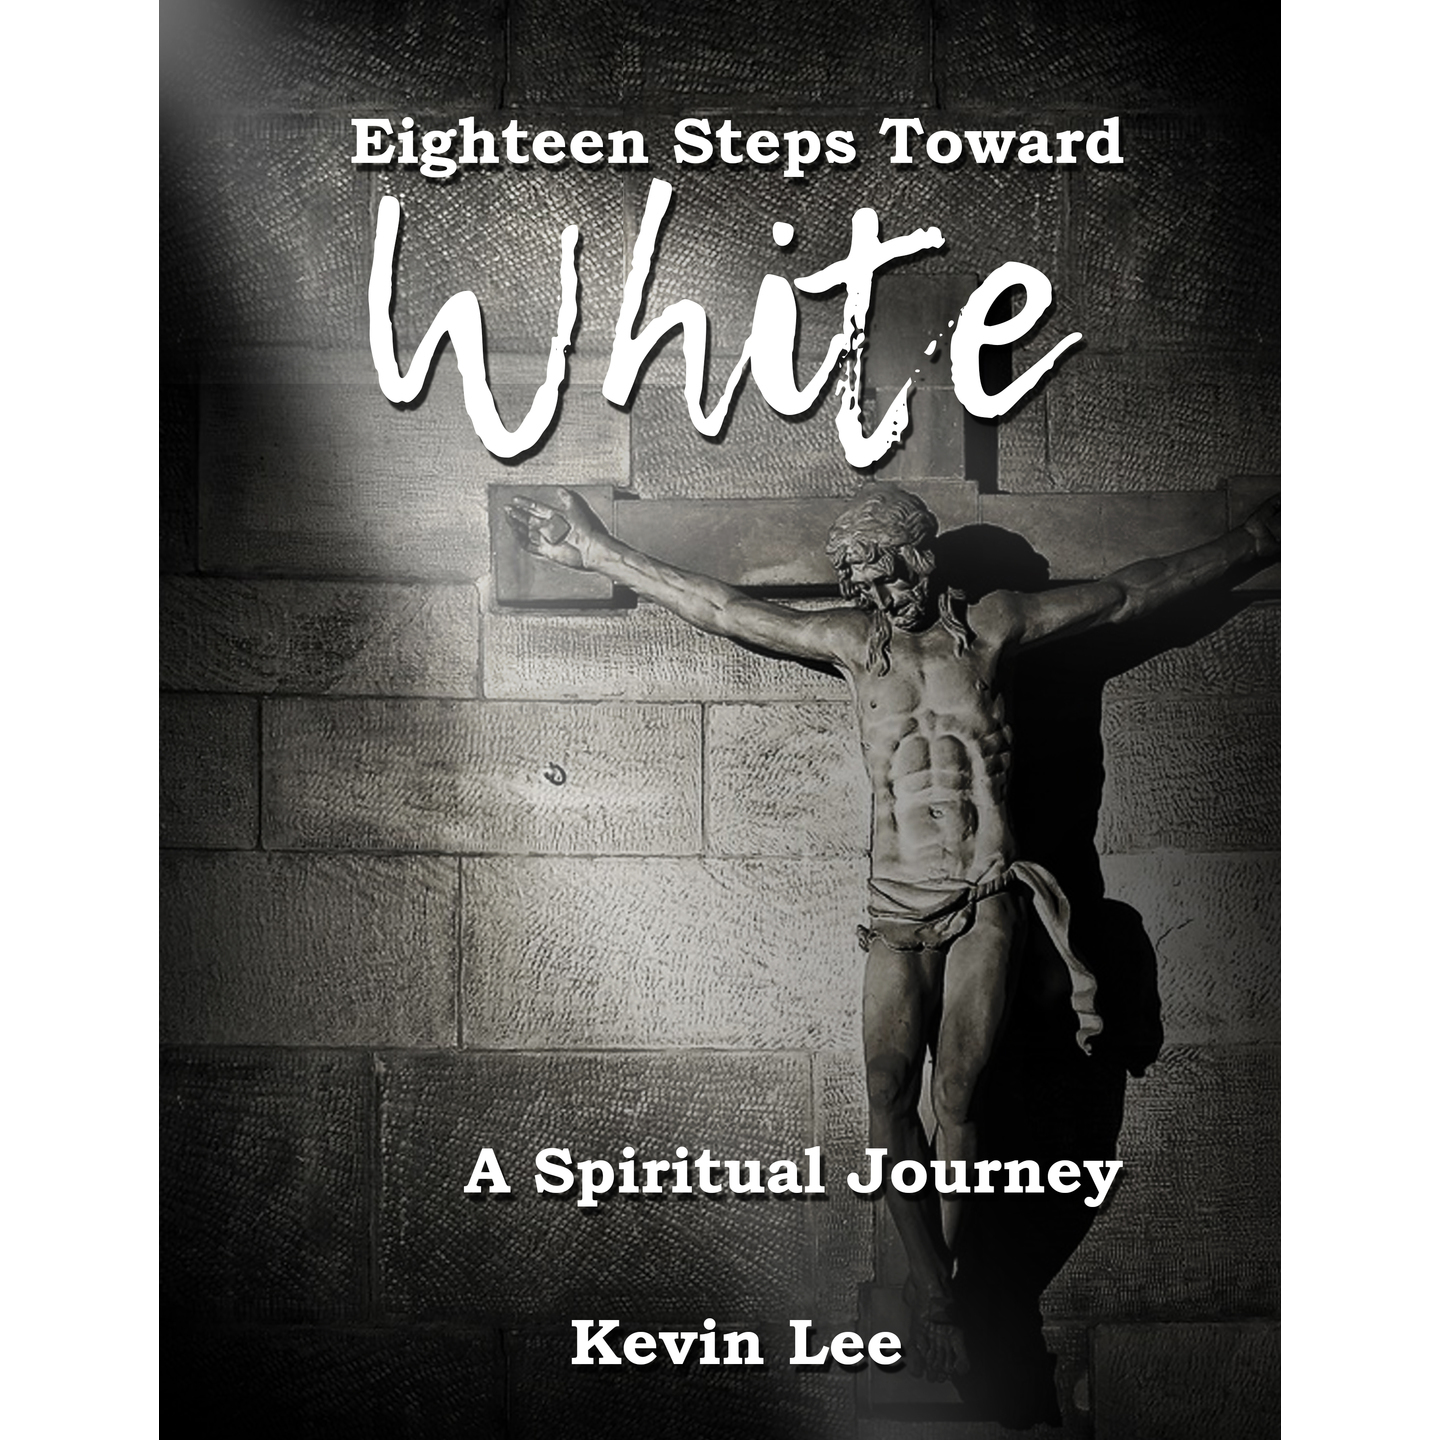 Eighteen Steps Toward White - A Spiritual Journey